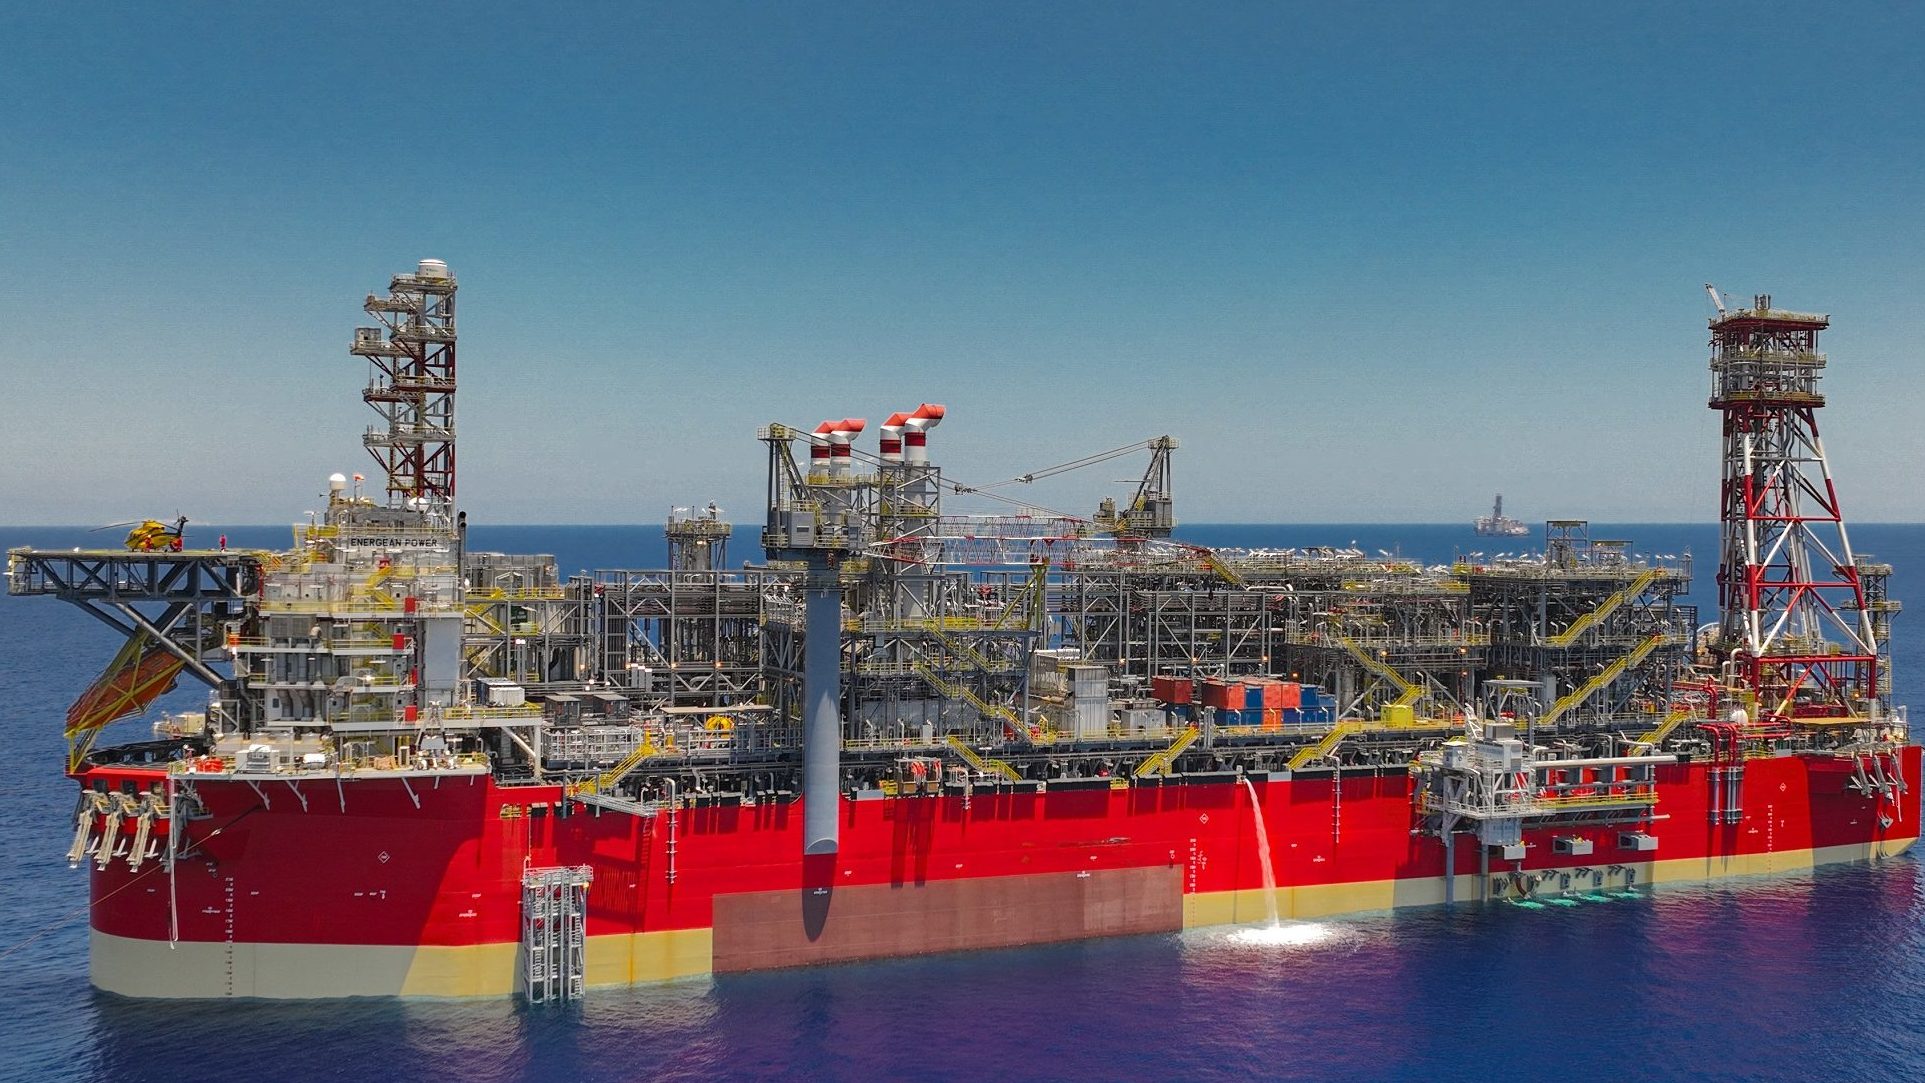 Israel To Begin Gas Production in Disputed Mediterranean Waters ‘ASAP’